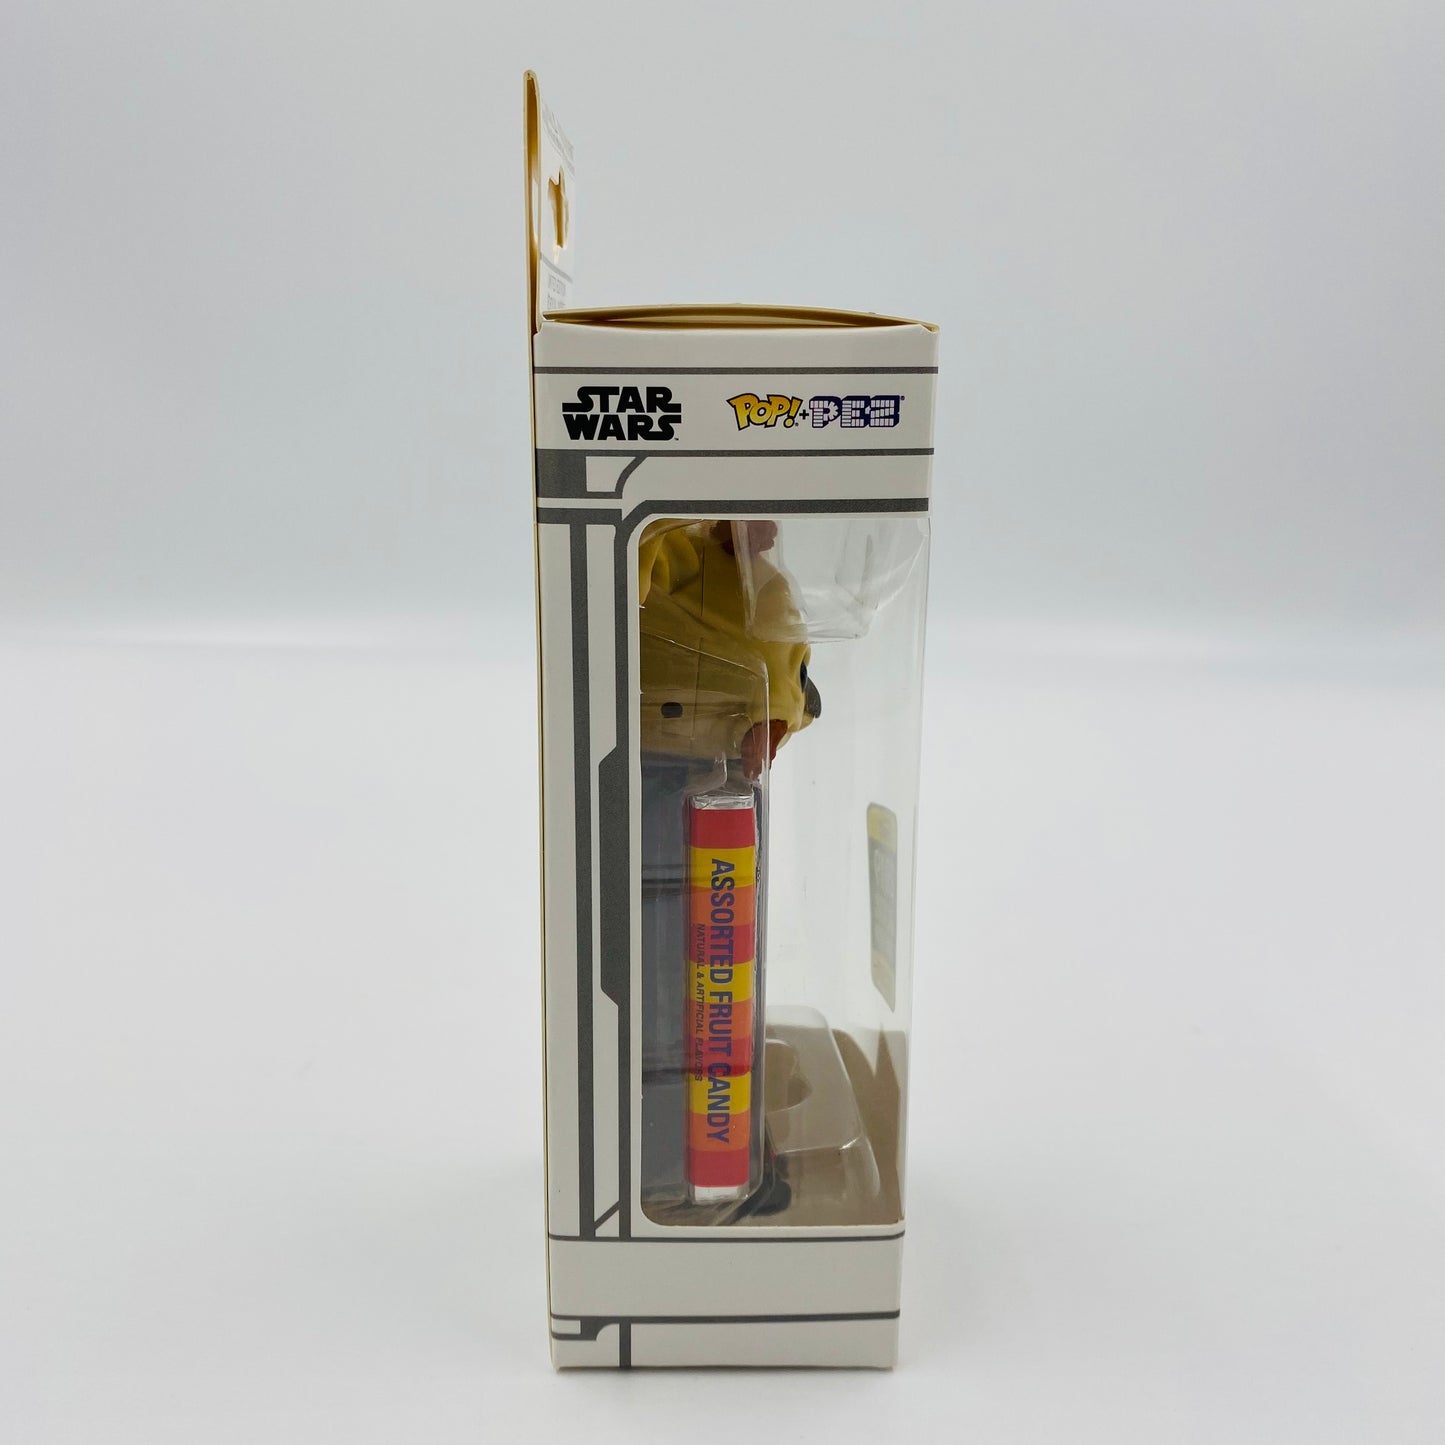 Star Wars Salacious Crumb Pop! + PEZ dispenser (2019) boxed